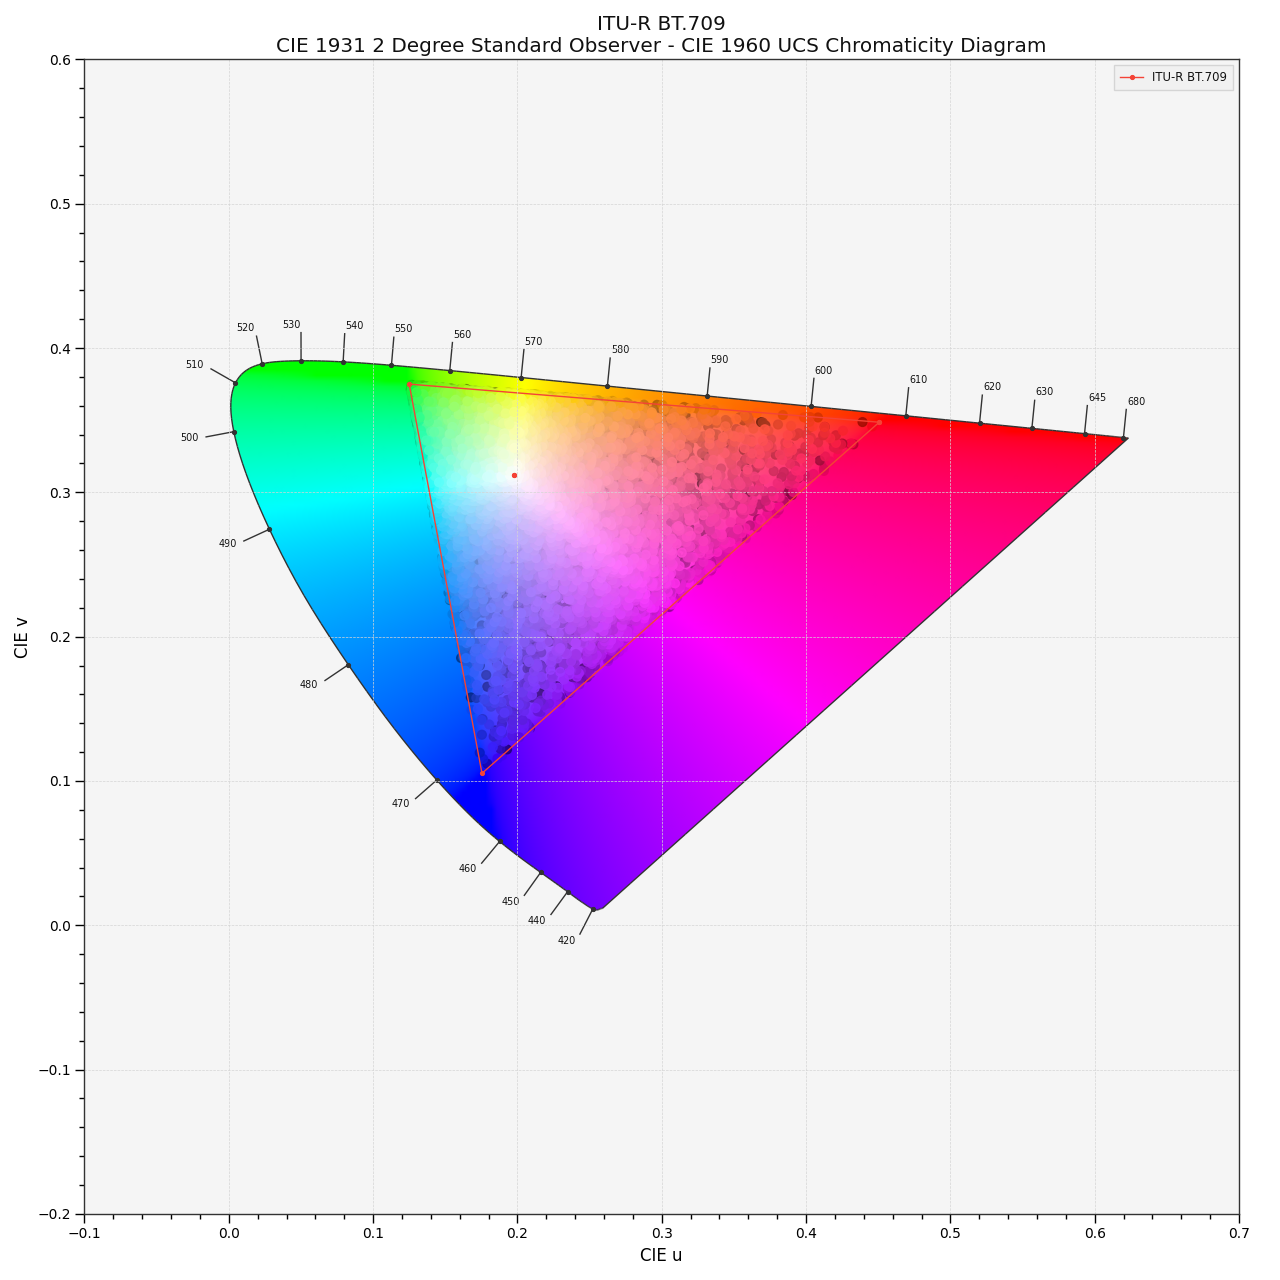 plot_RGB_chromaticities_in_chromaticity_diagram_CIE1960UCS